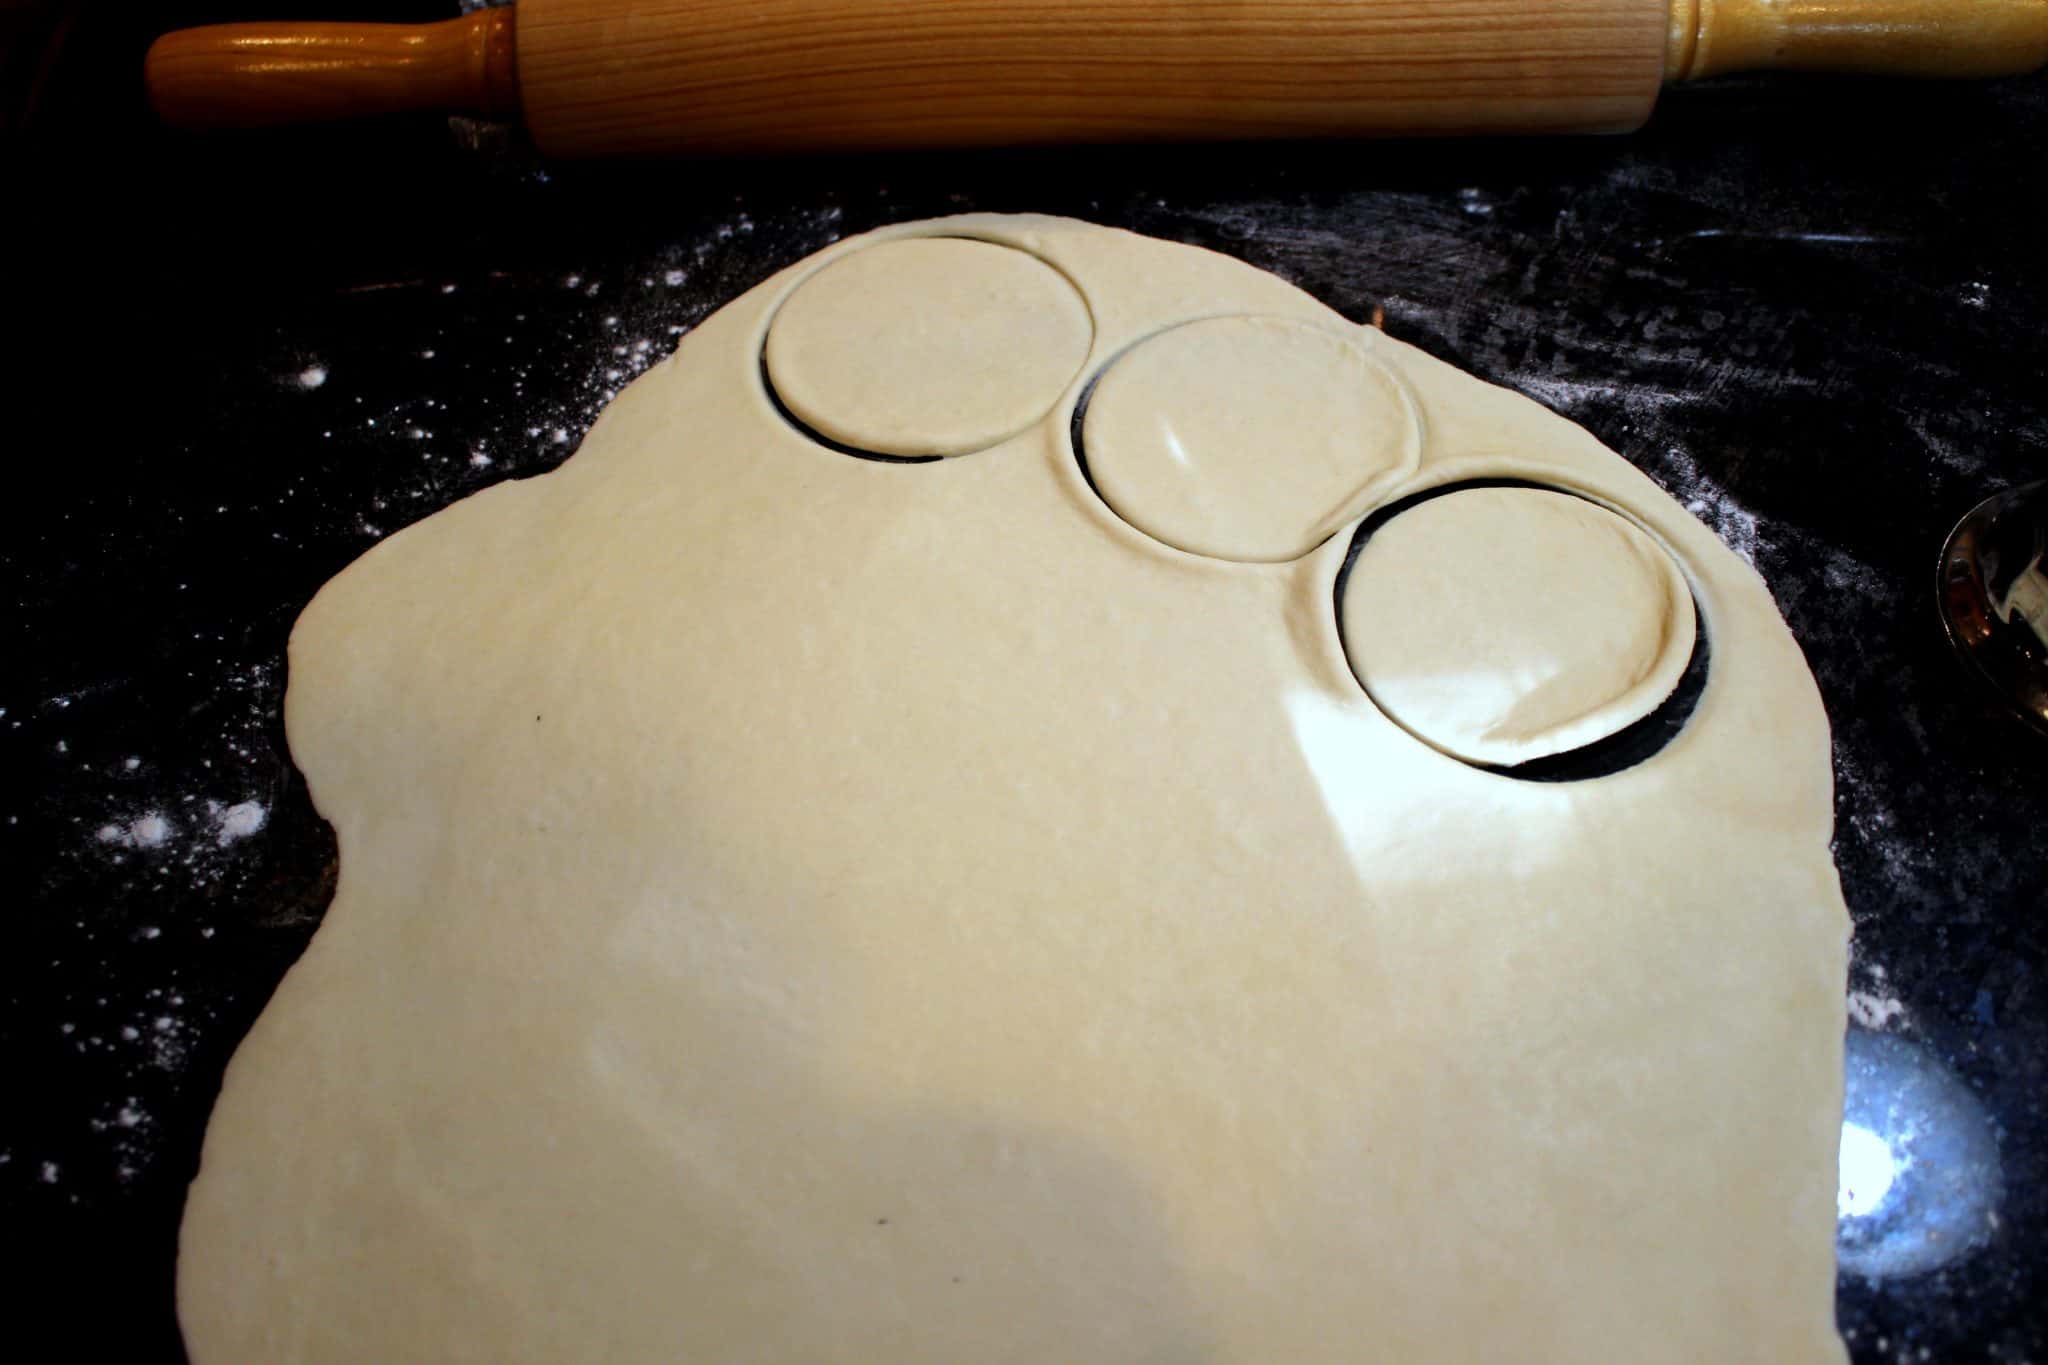 rolling and cutting the empanada dough